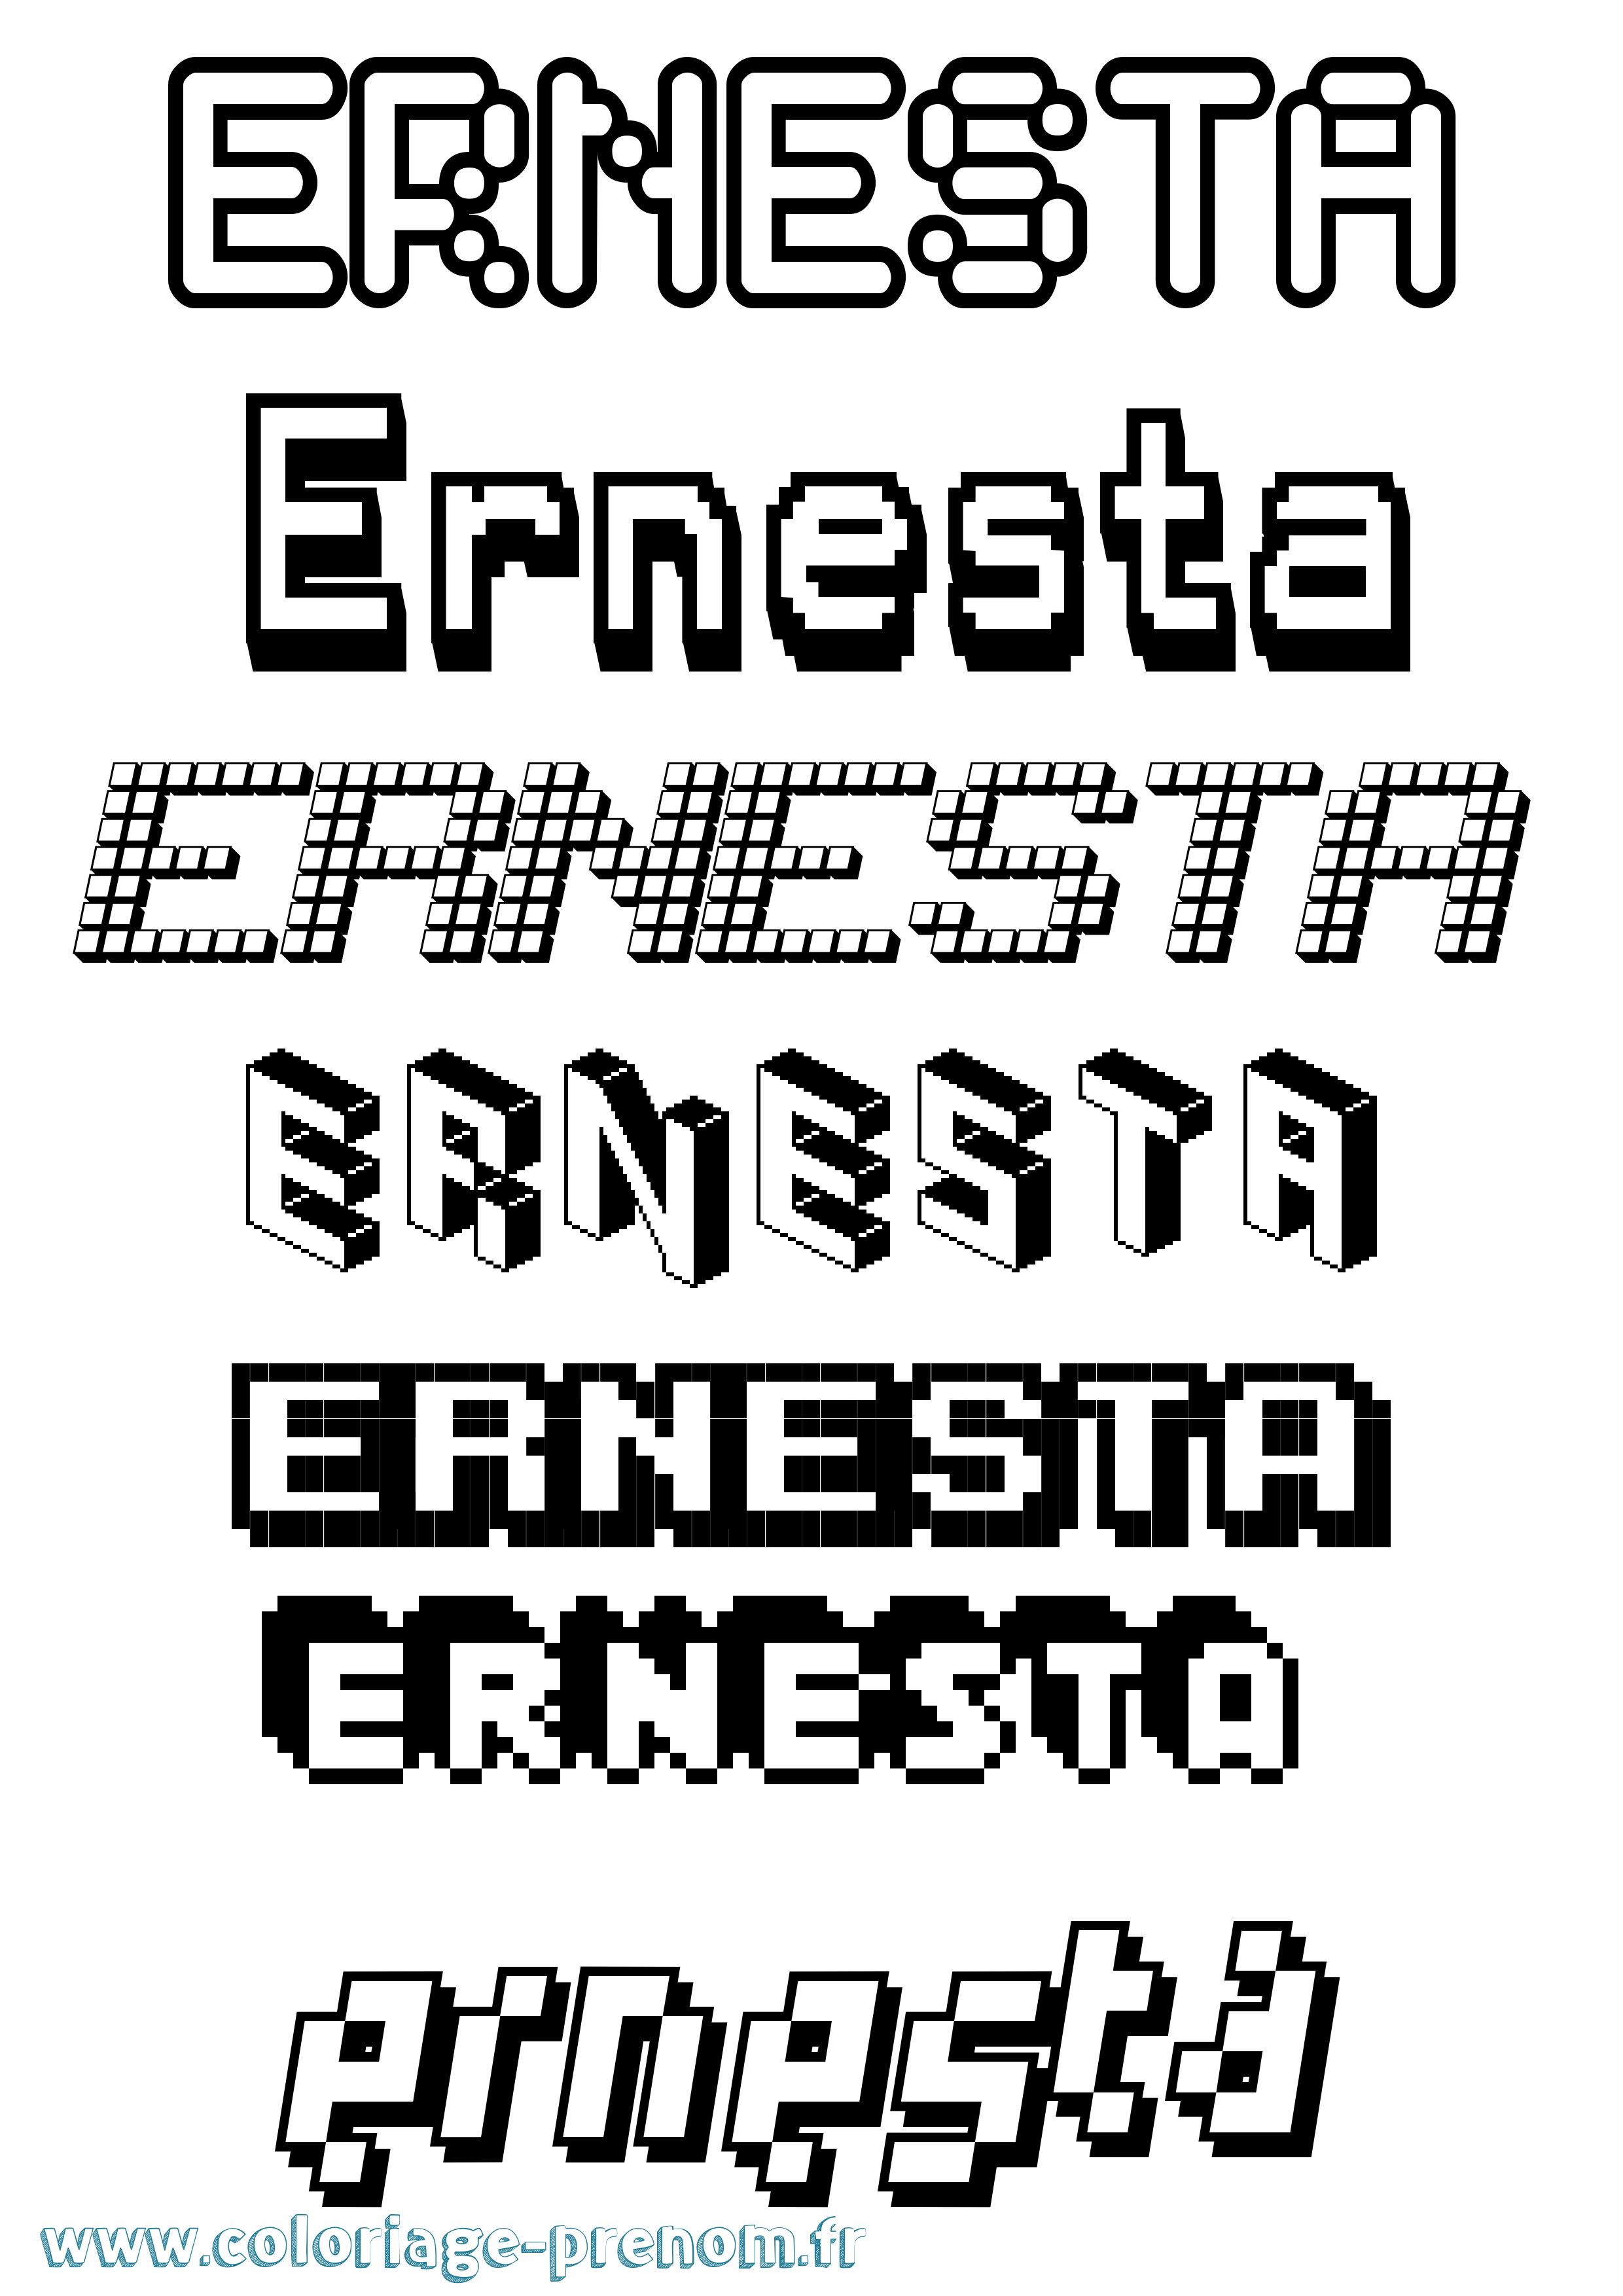 Coloriage prénom Ernesta Pixel